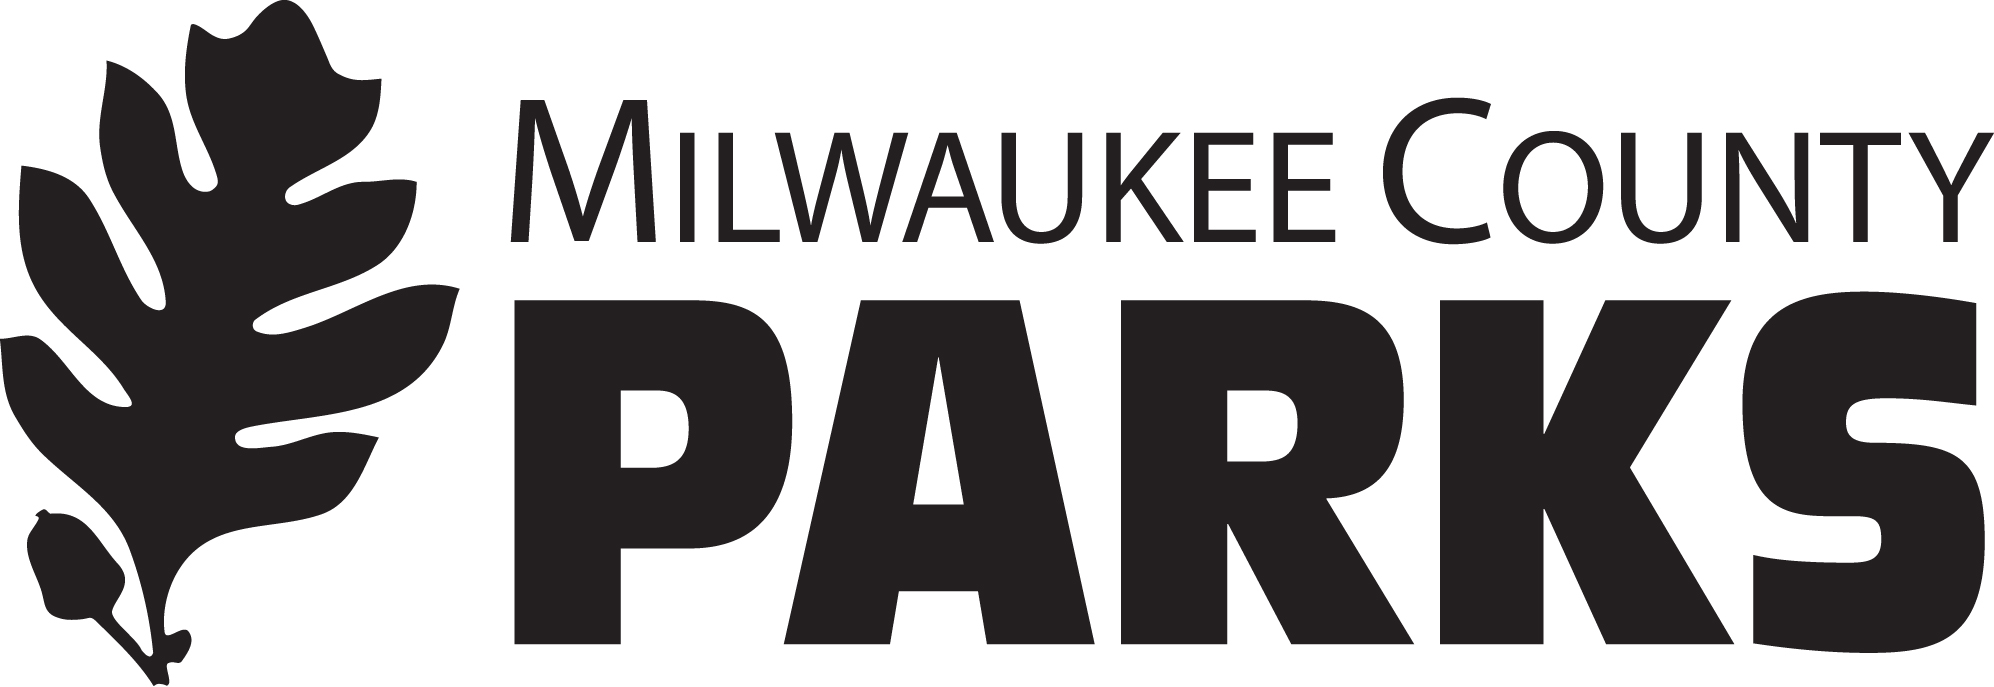 Milwaukee County Parks